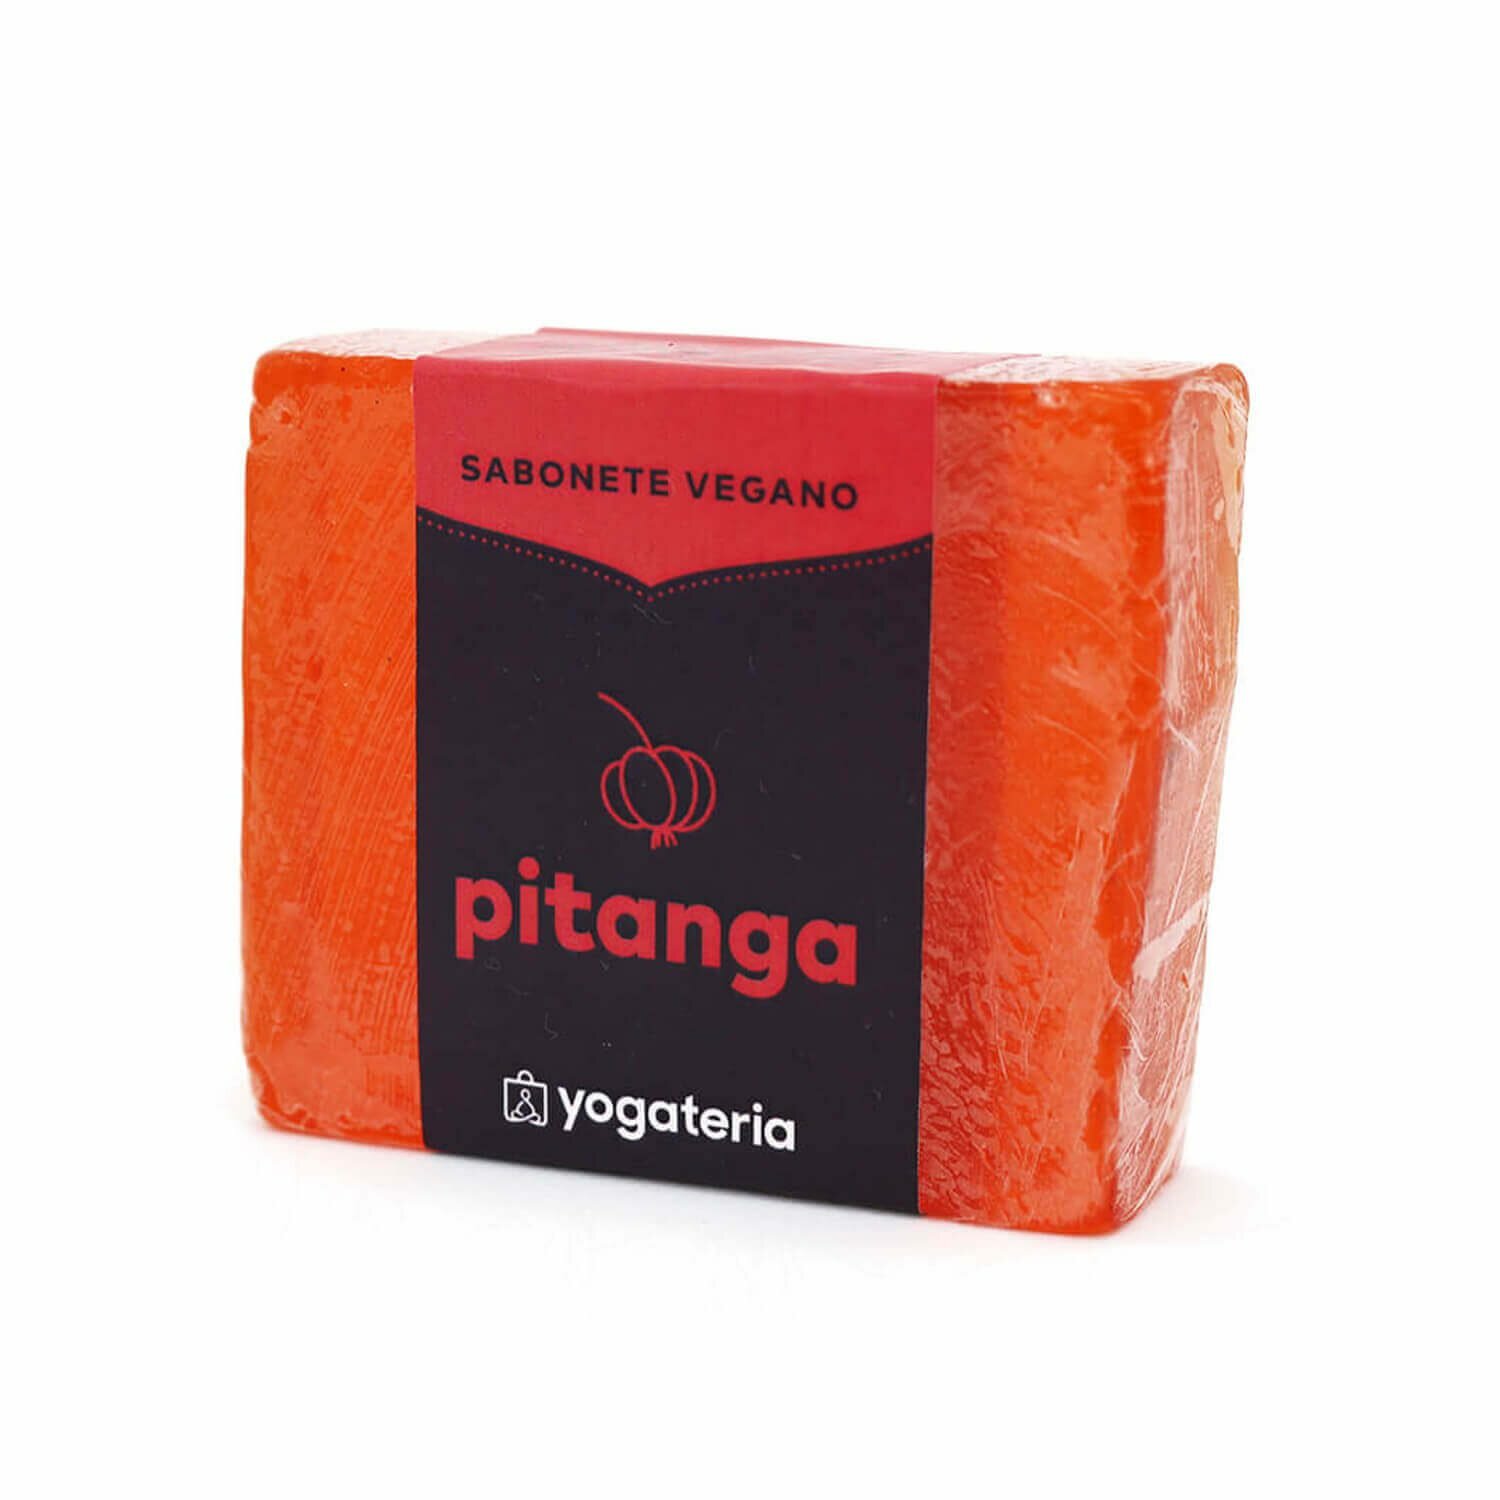 Sabonete Vegano Pitanga 16